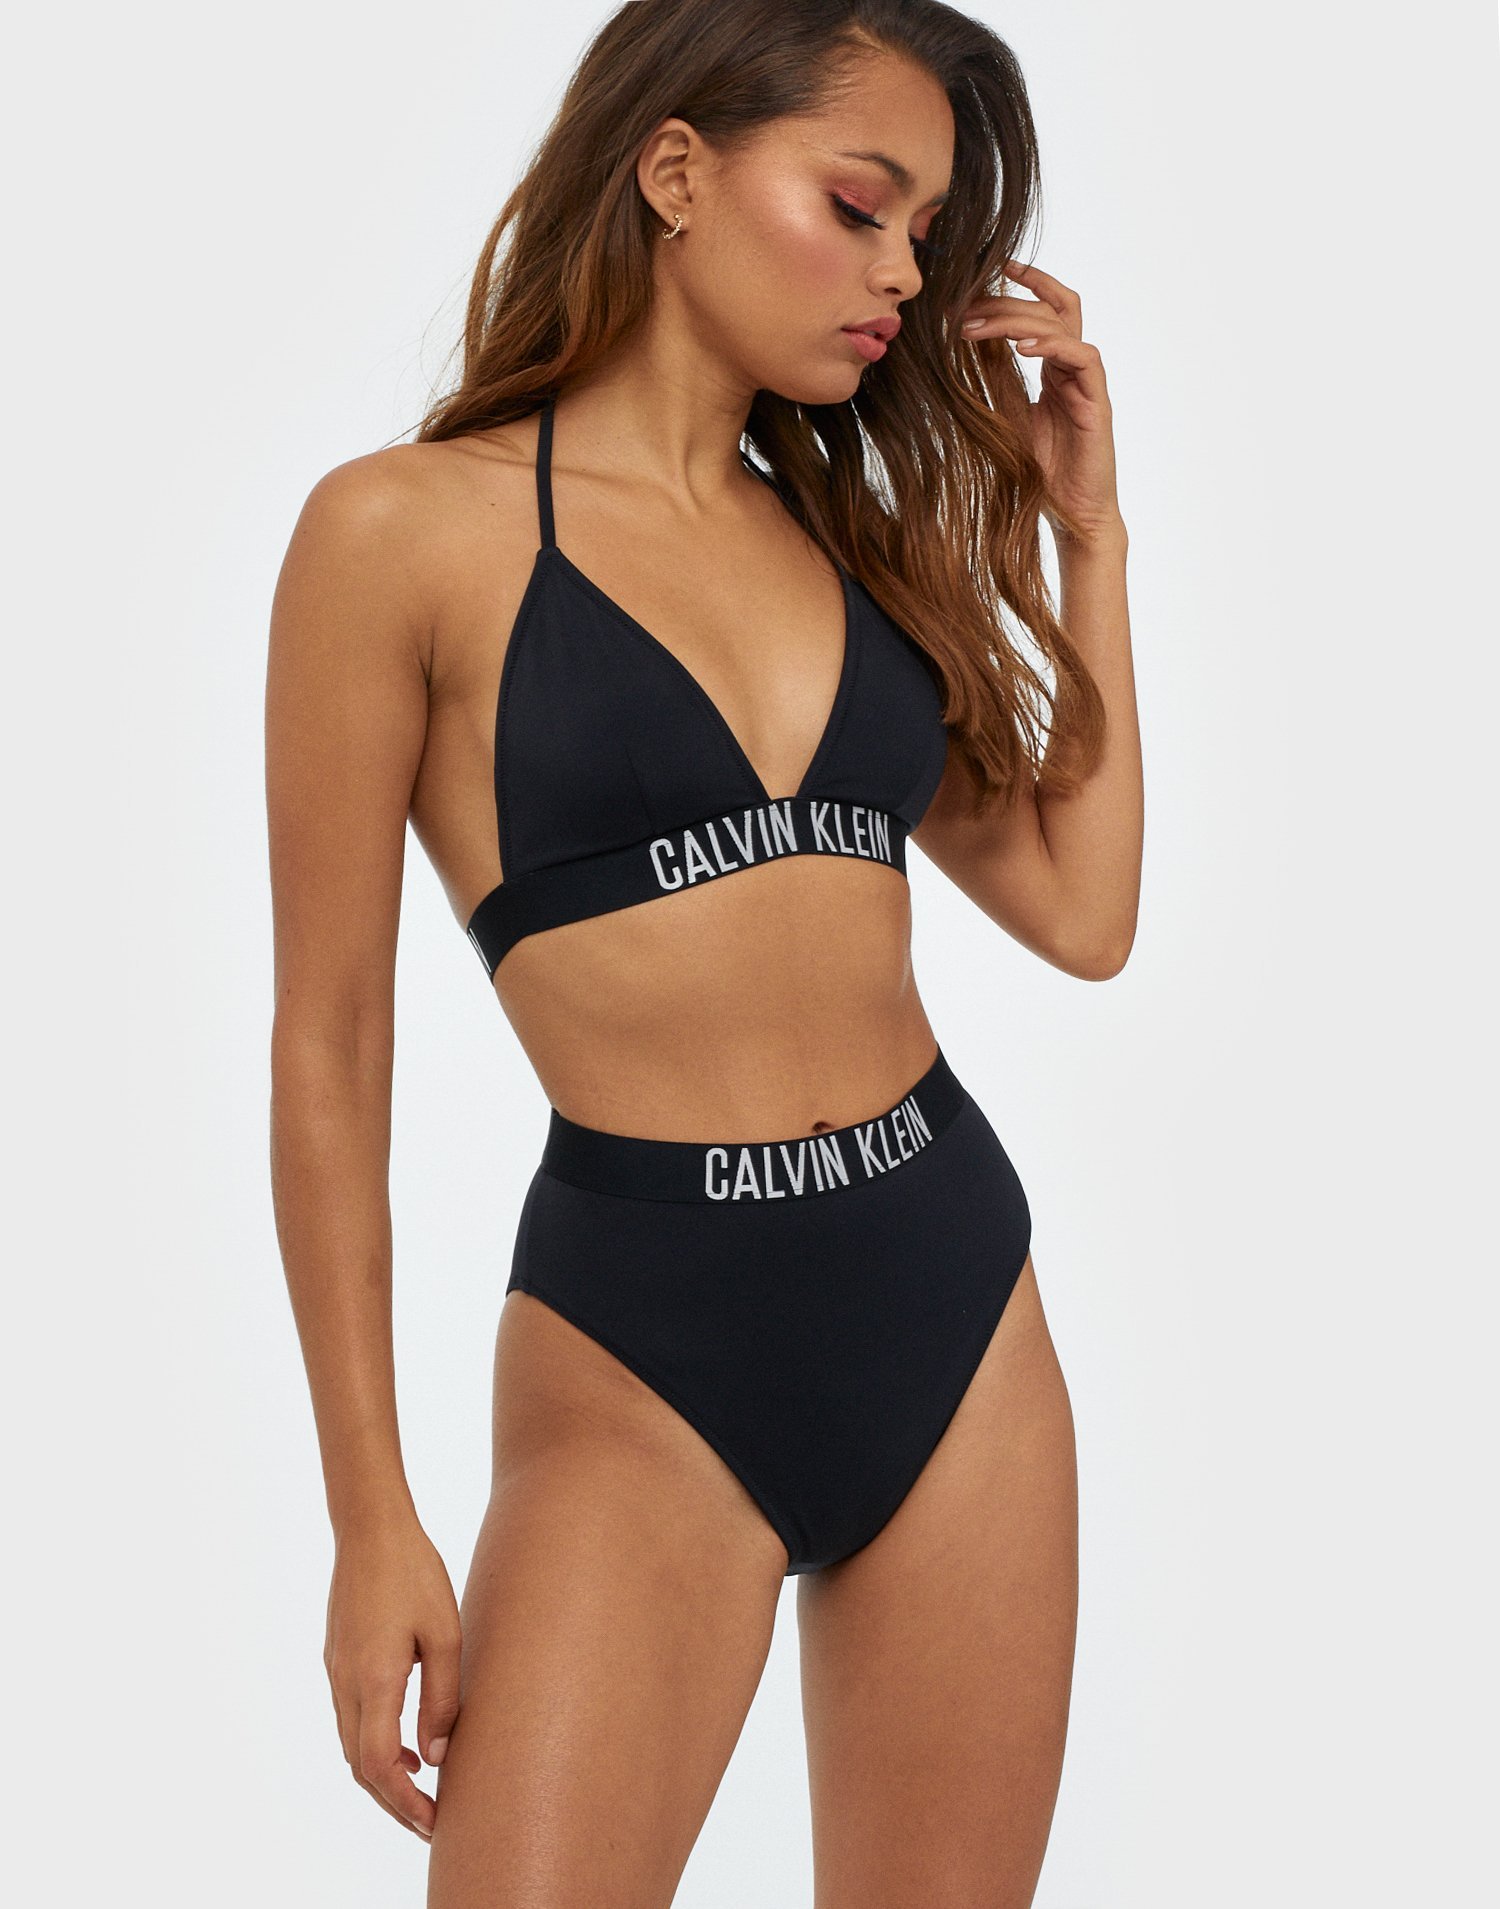 Calvin Klein high waist bikini briefs in charcoal grey